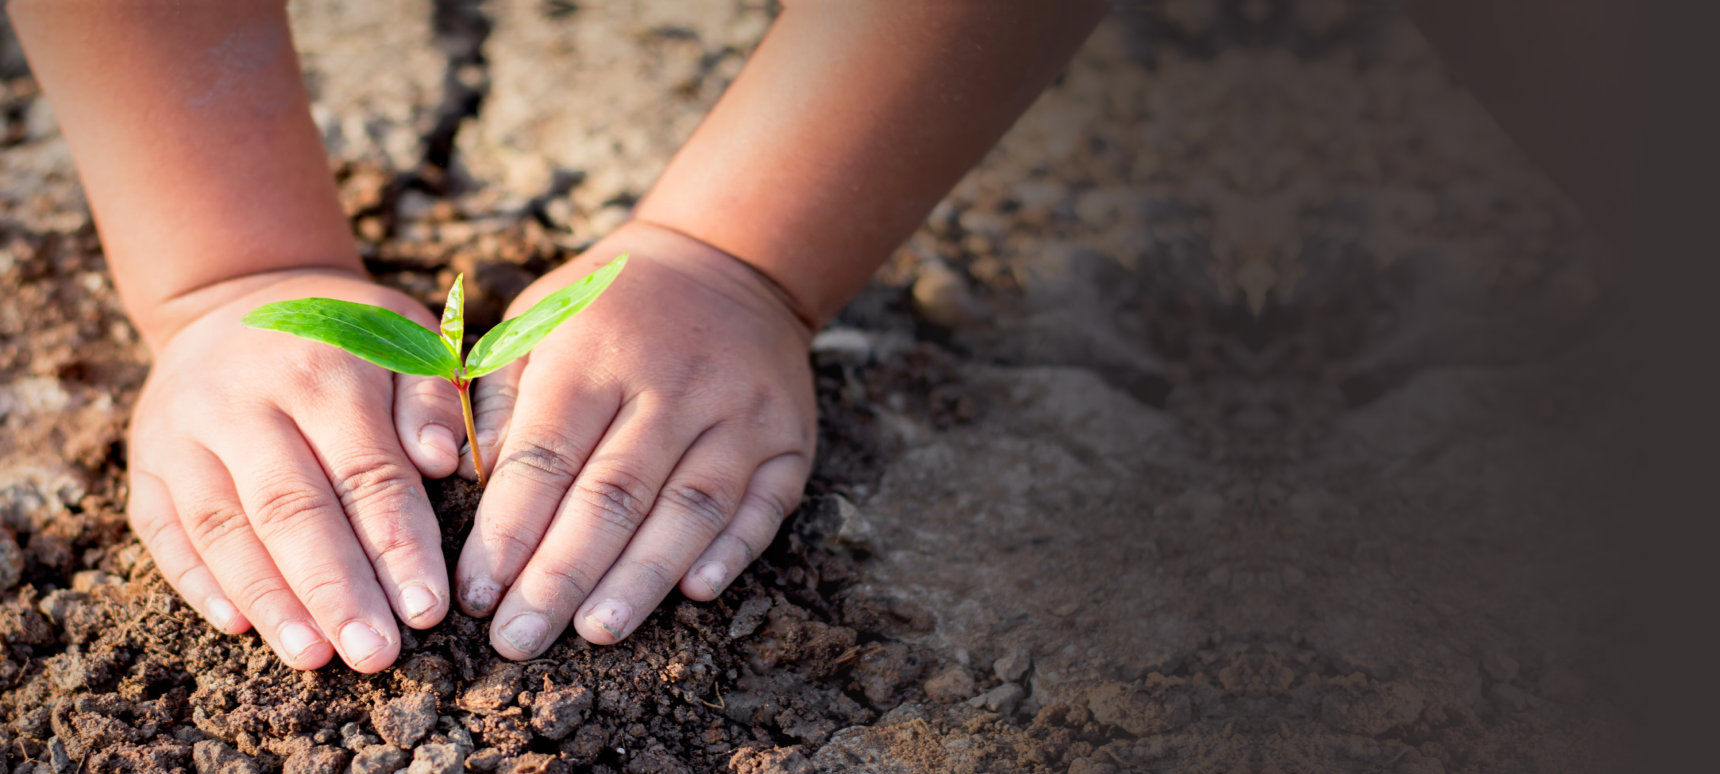 little kid's hand planting a sapling